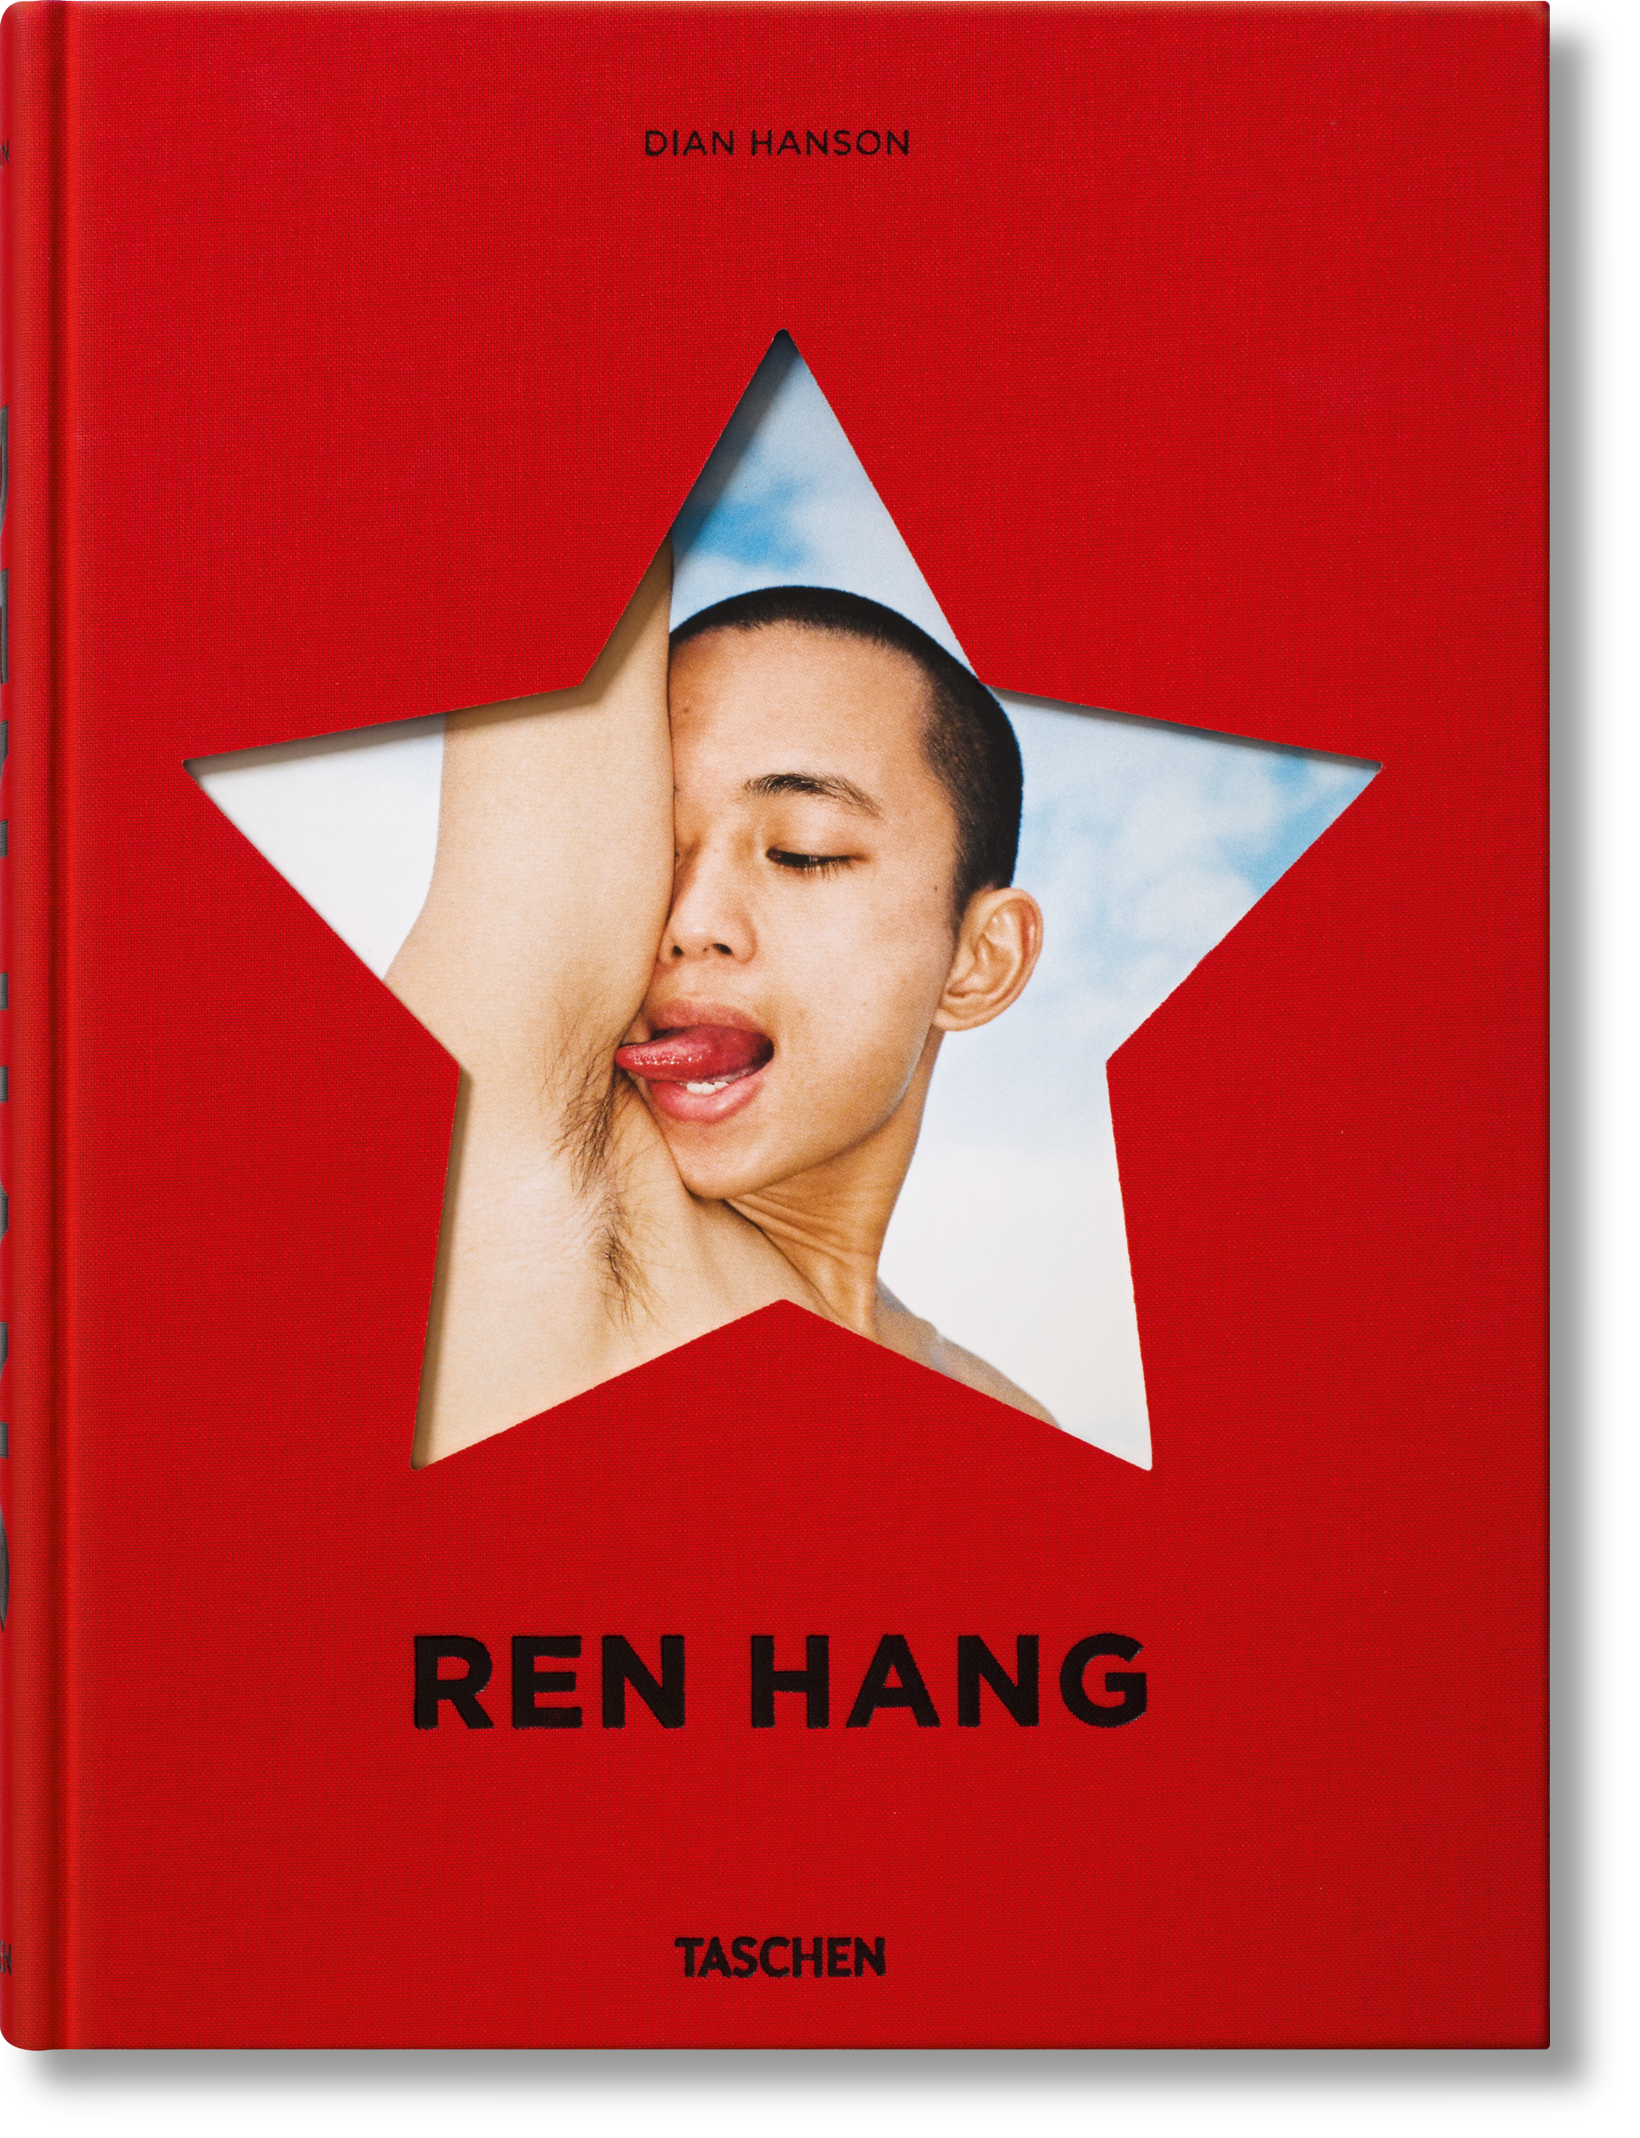 TASCHEN Books: Get the only international collection of Ren Hang.